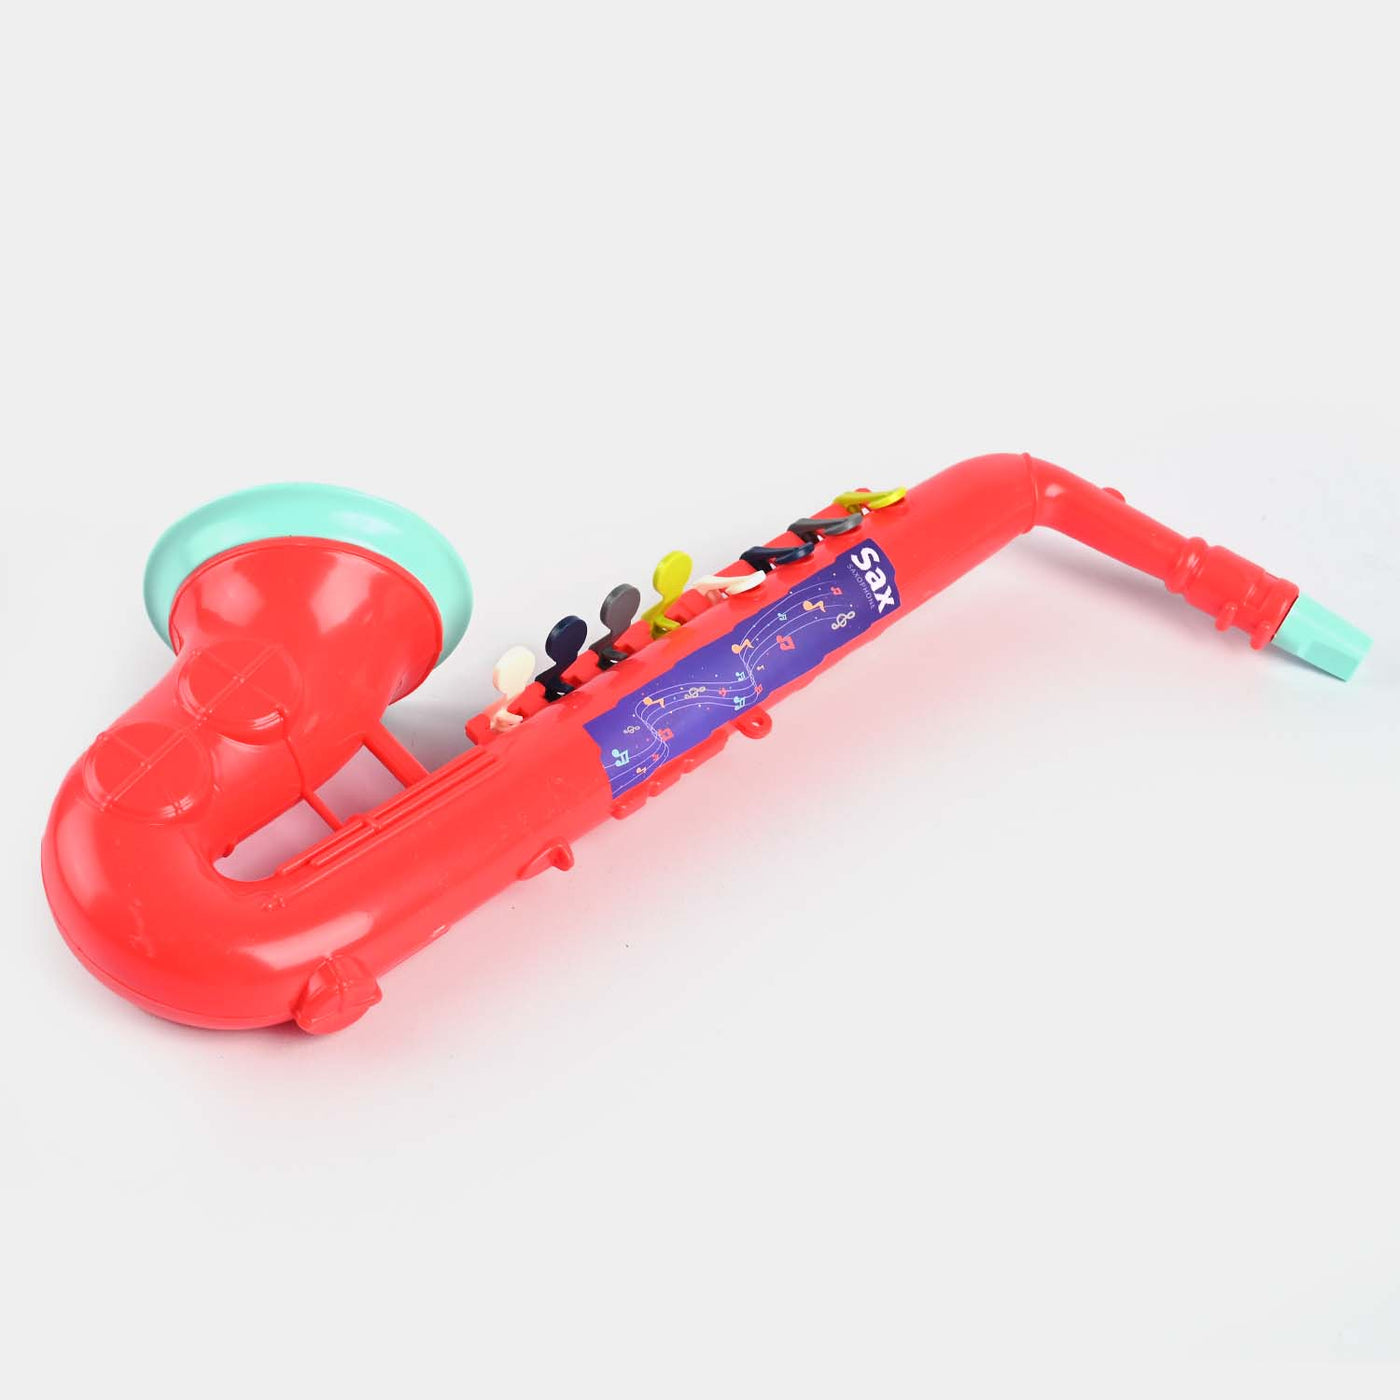 Musical Instrument Adjustable Great Volume Saxophone Toy For Kids